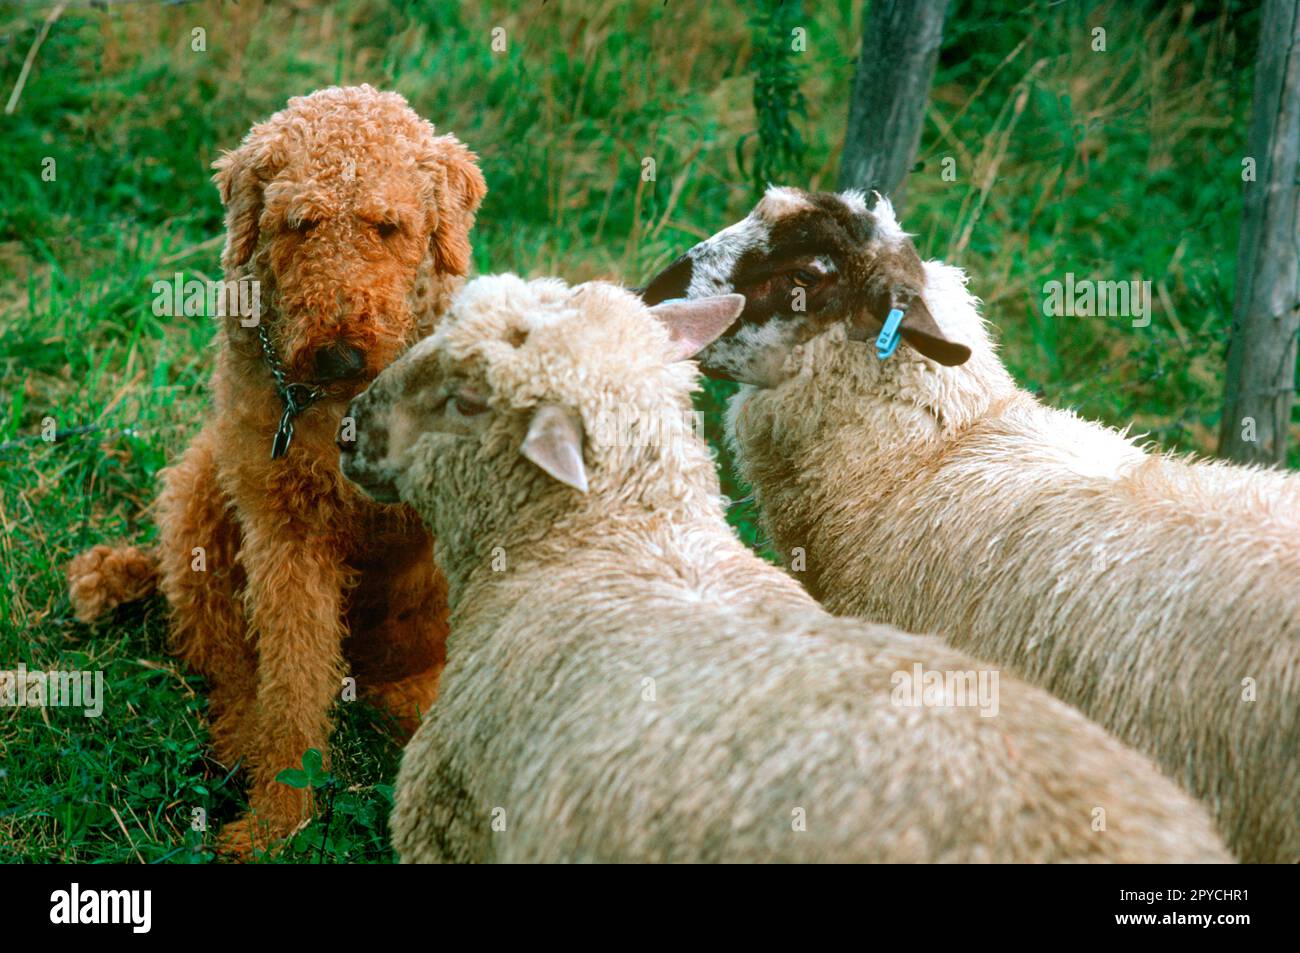 dog and sheep. Stock Photo